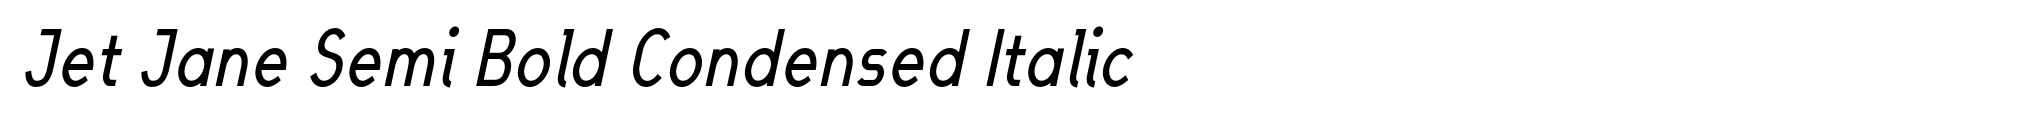 Jet Jane Semi Bold Condensed Italic image